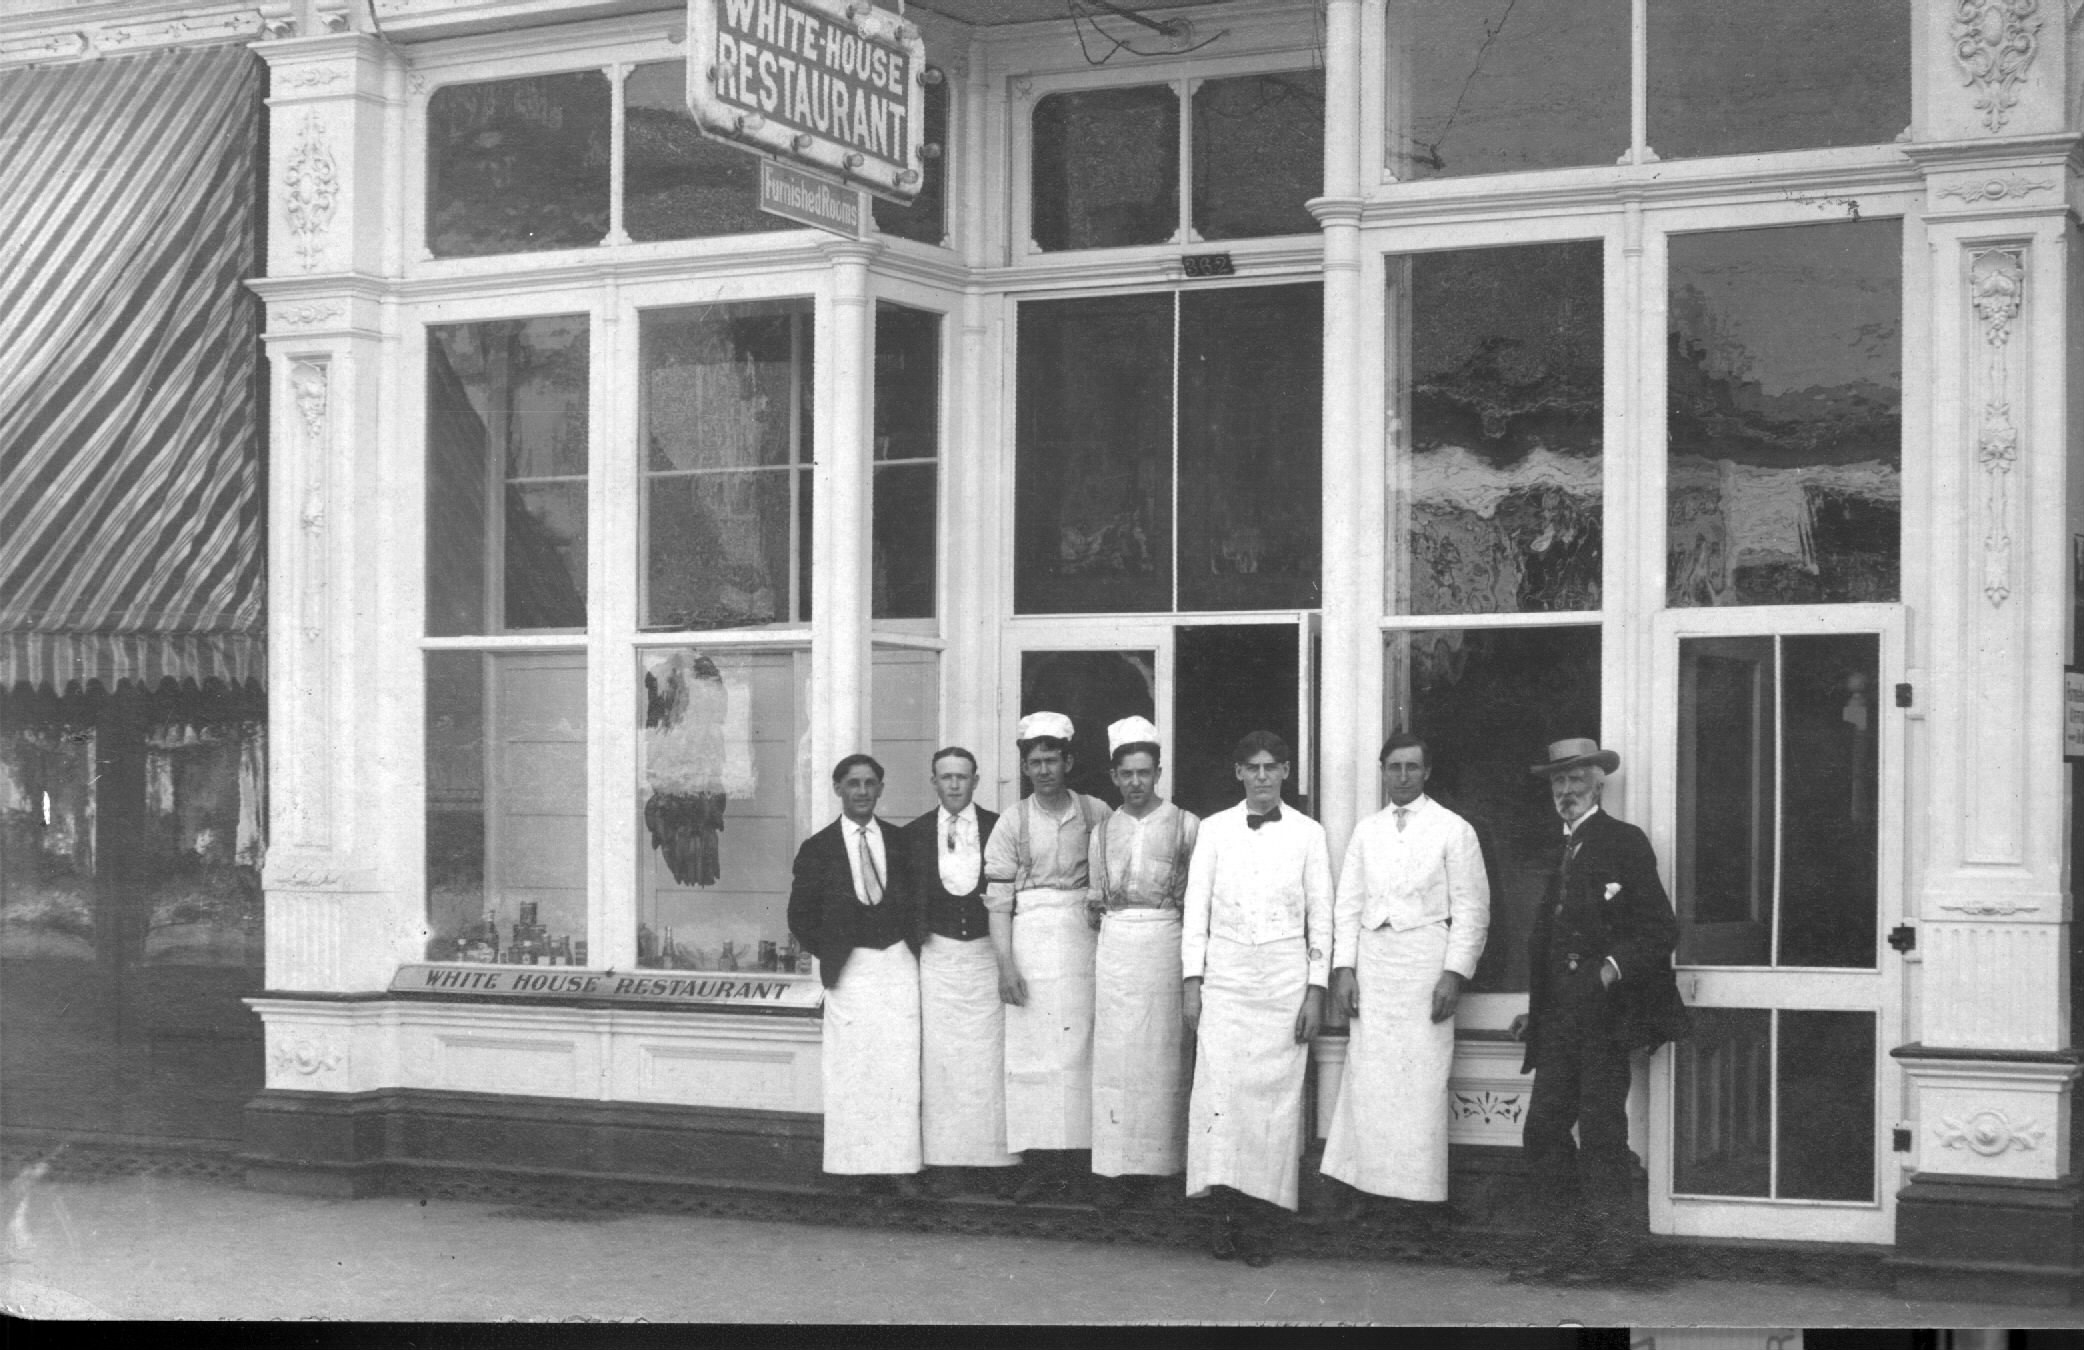 White house restaurant staff outside the White House Restaurant. Photo Source: Willamette Heritage Center 1998.012.0063 